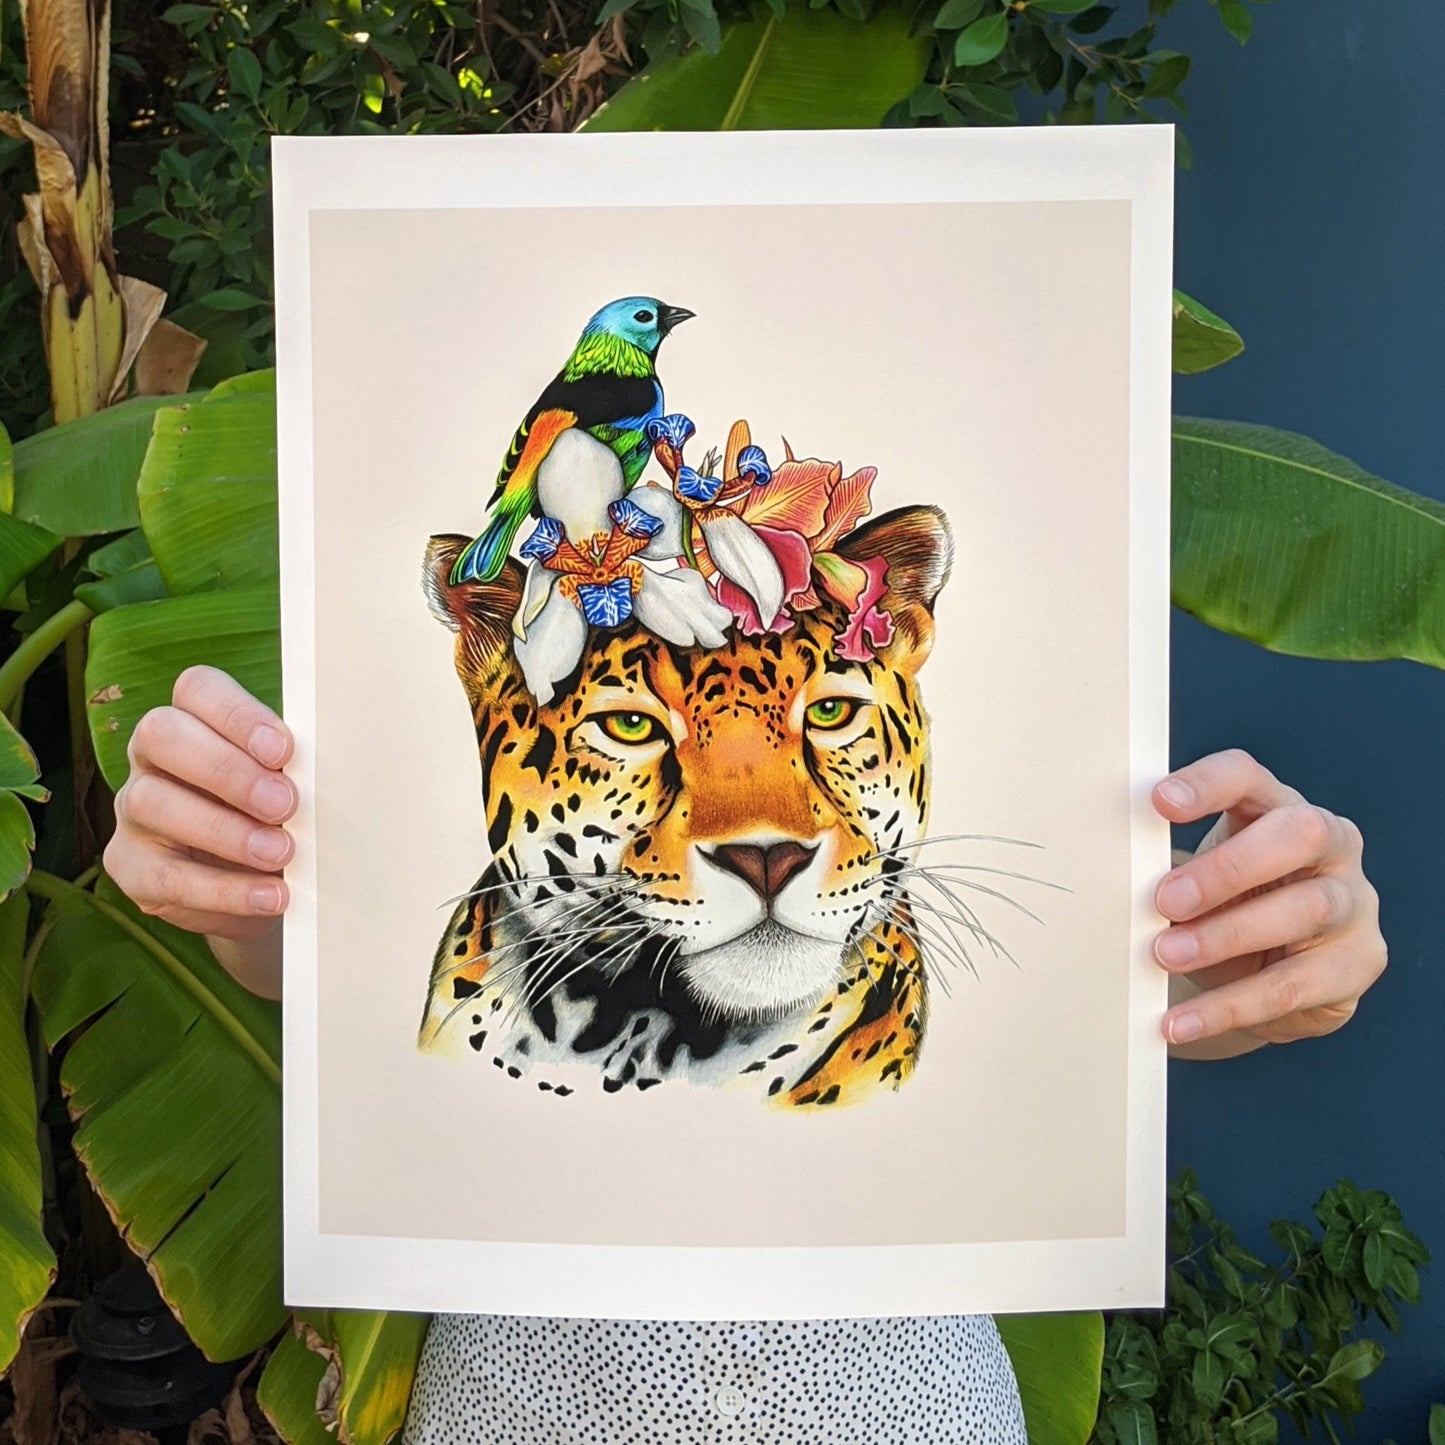 Hand drawn pencil art of jaguar with tropical bird and flowers by Rachel Diaz-Bastin. Prints available. 